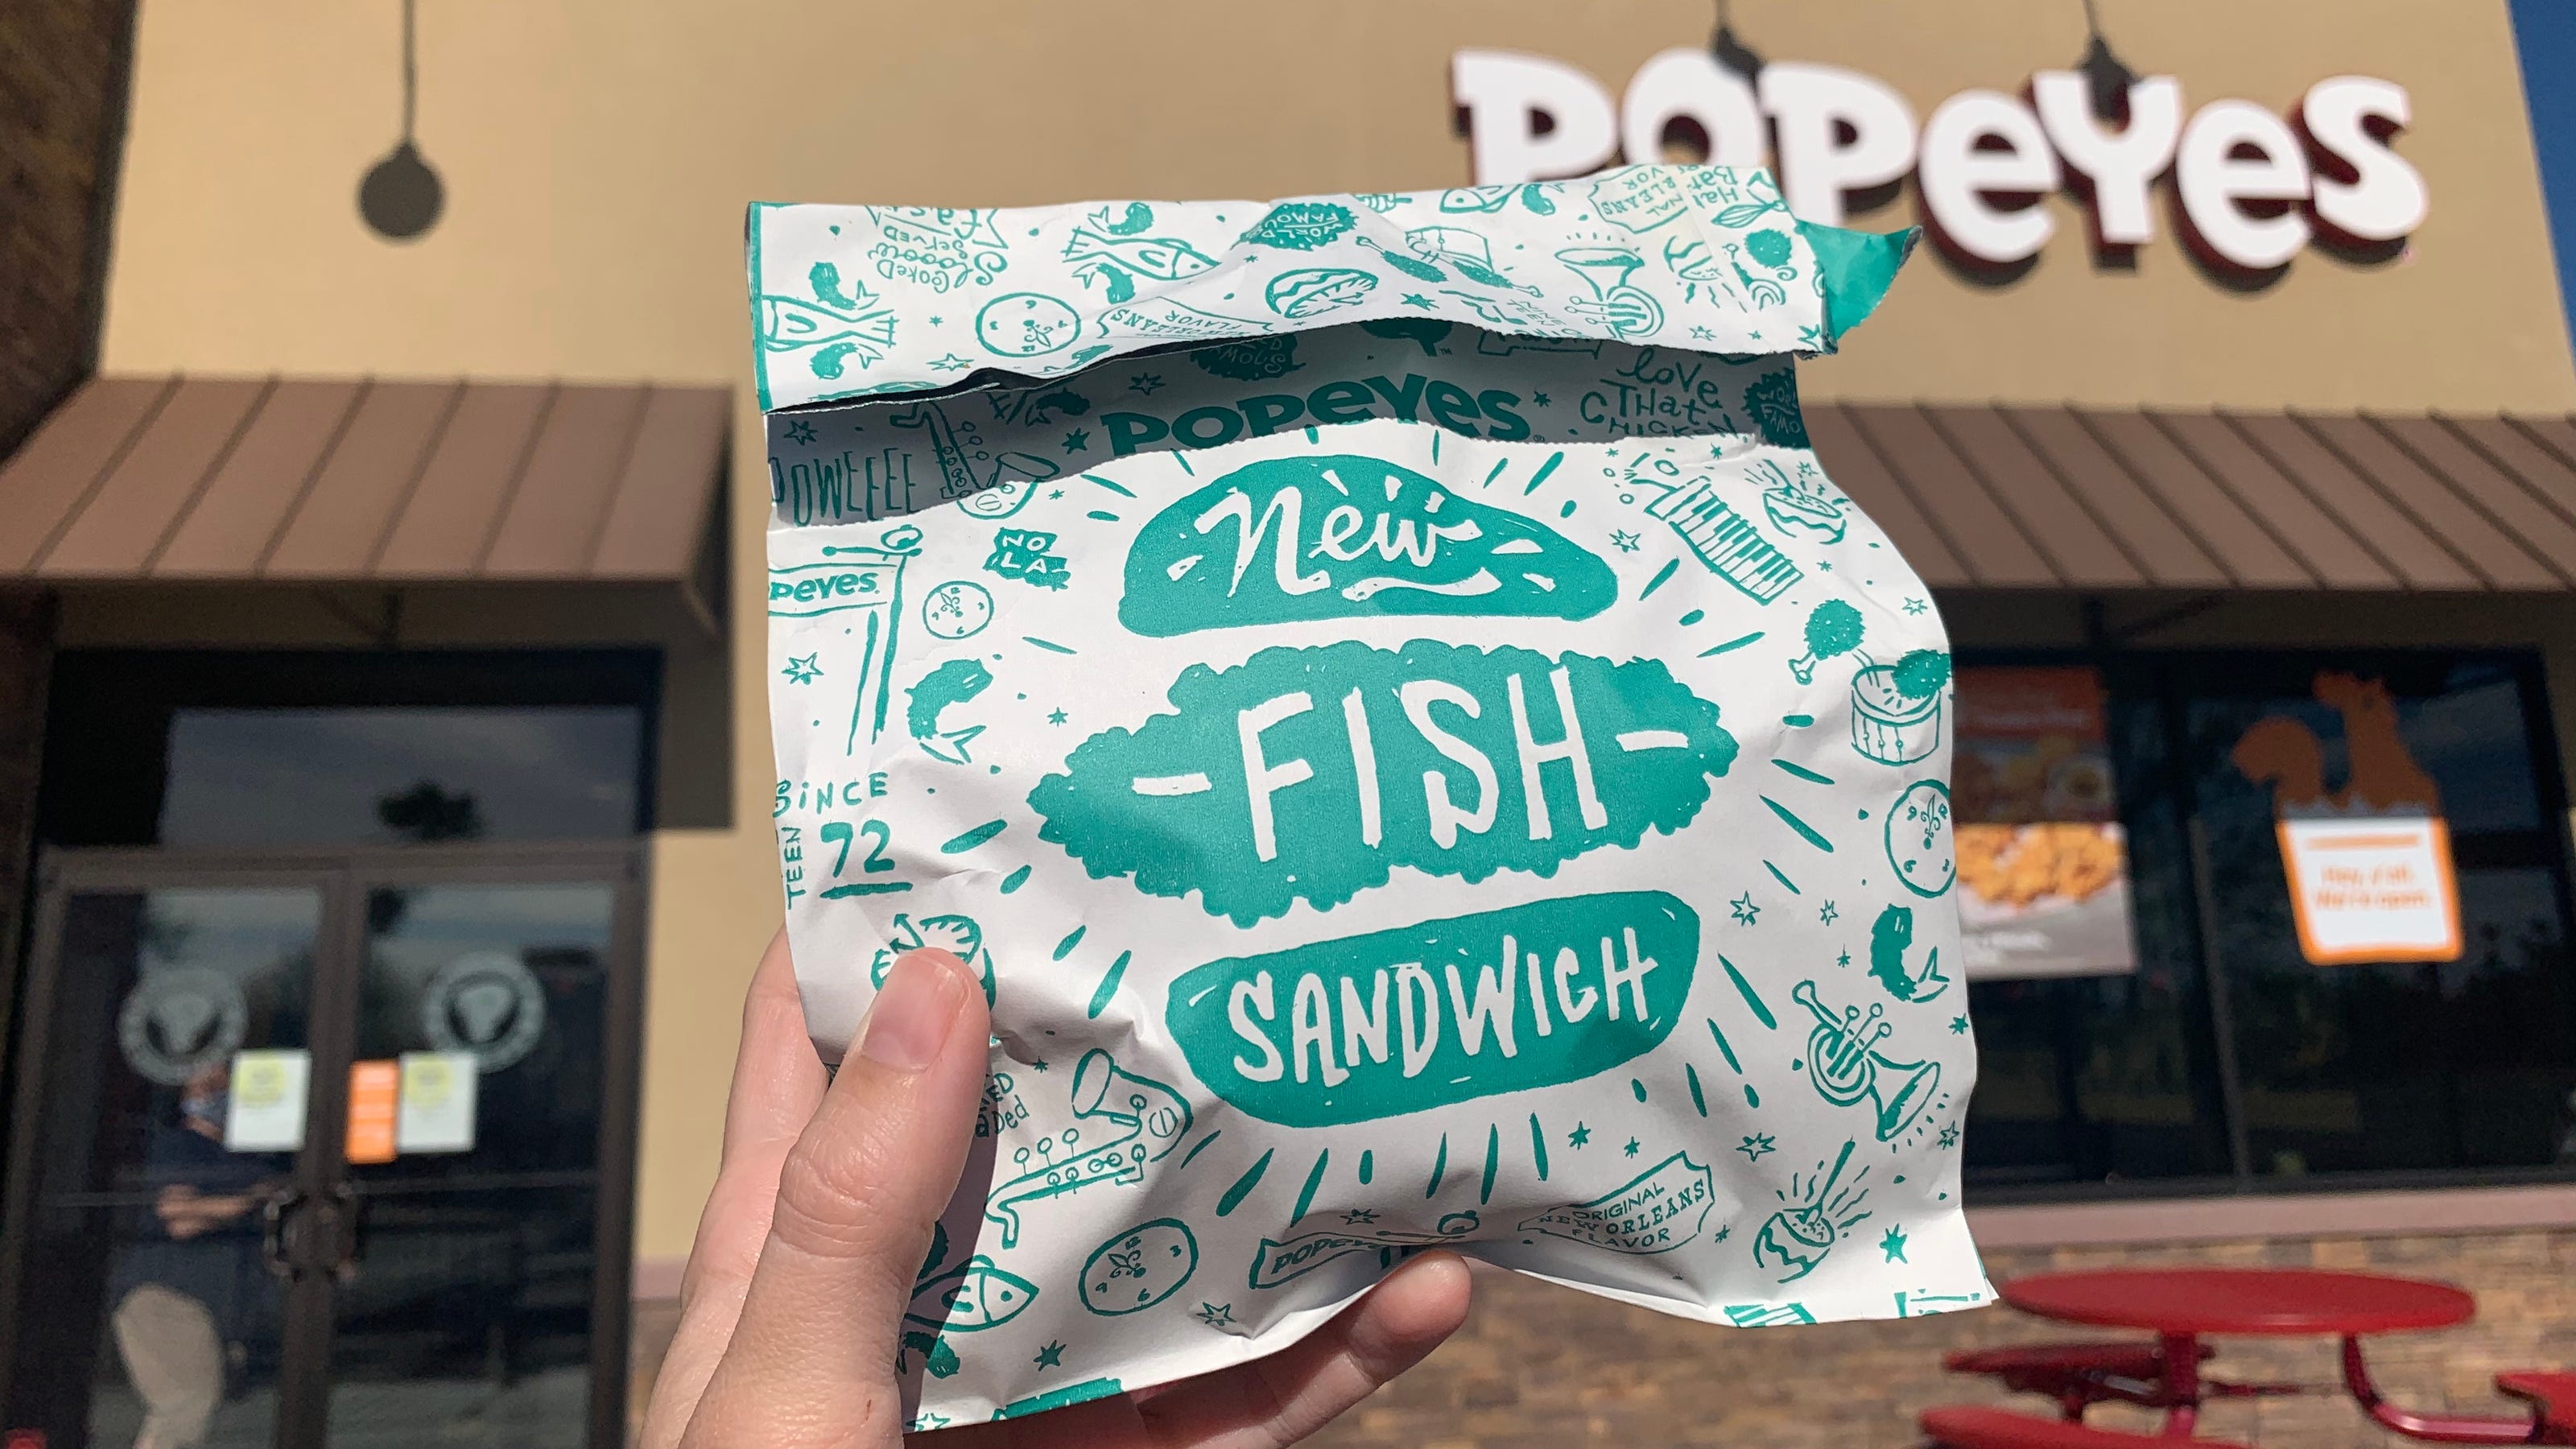 Popeyes fish sandwich review We tried the new Cajun flounder sandwich